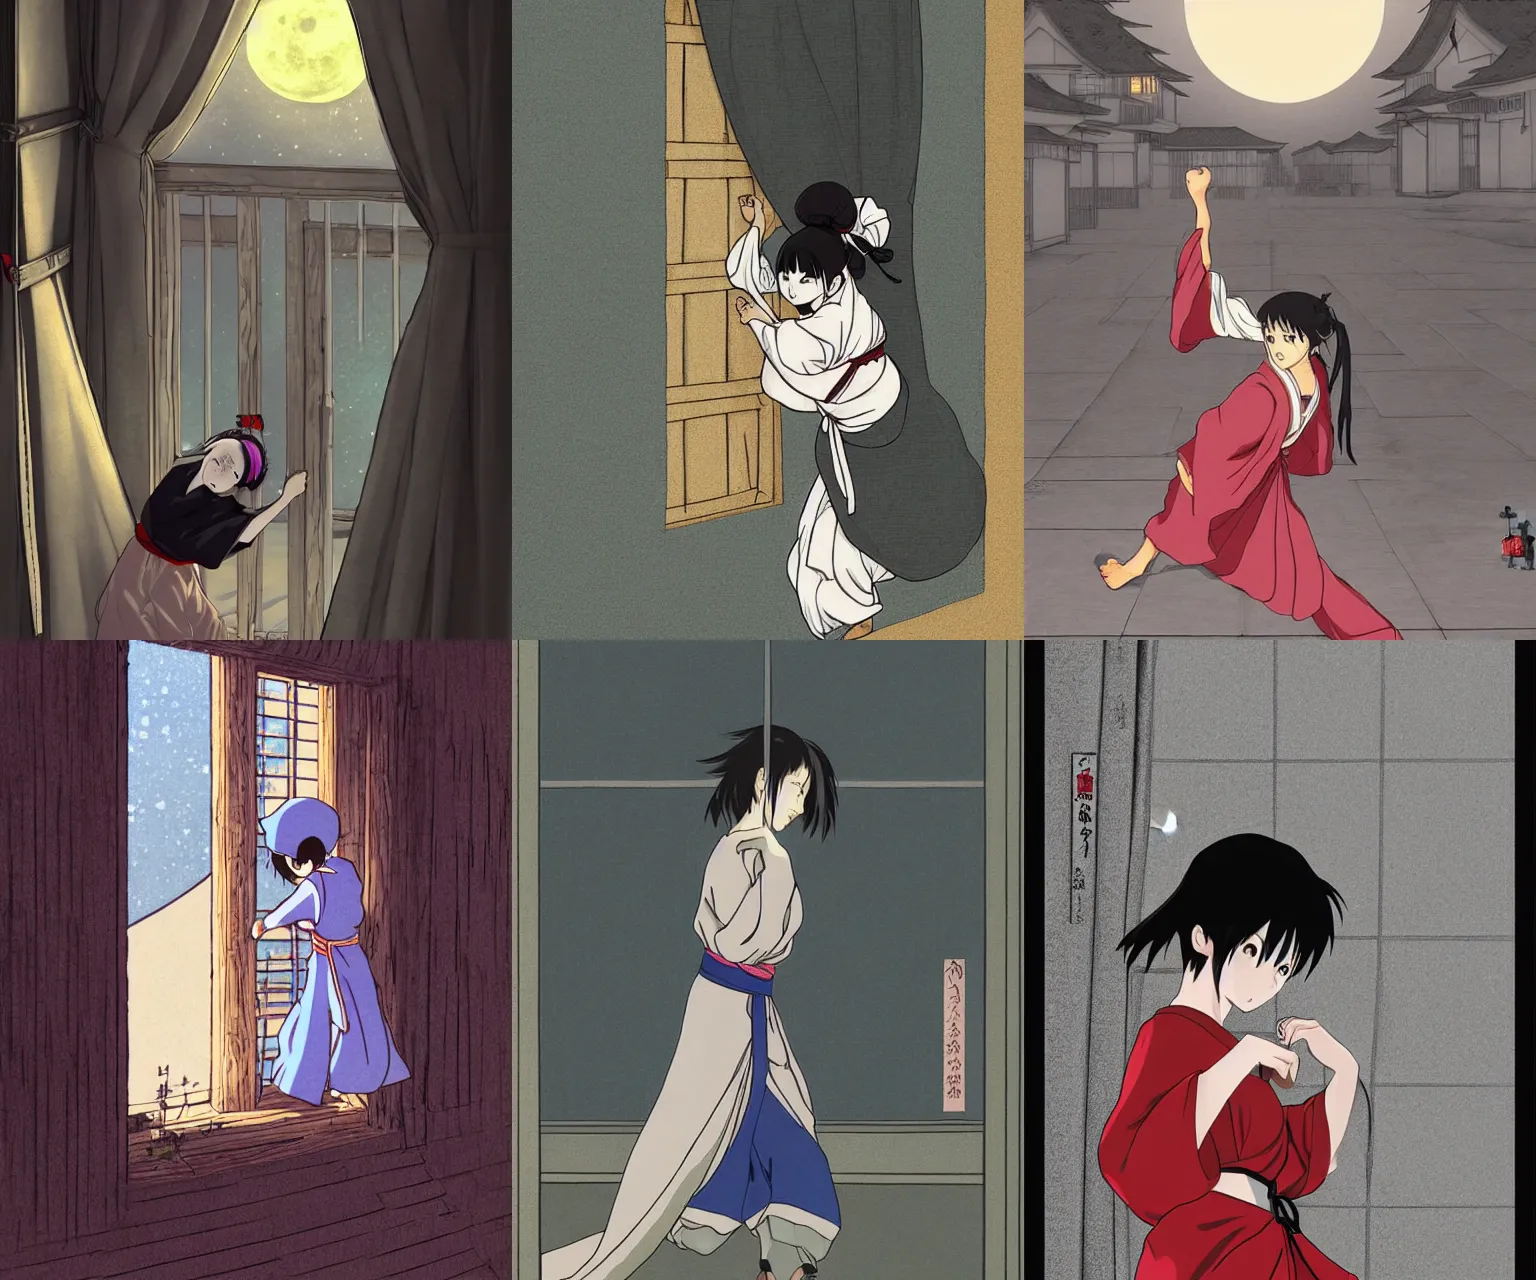 Prompt: A ninja girl in a short peasant kimono, carefully climbing through open window, smooth shading, highly detailed, strong moonlight, digital anime art by Hayao Miyazaki